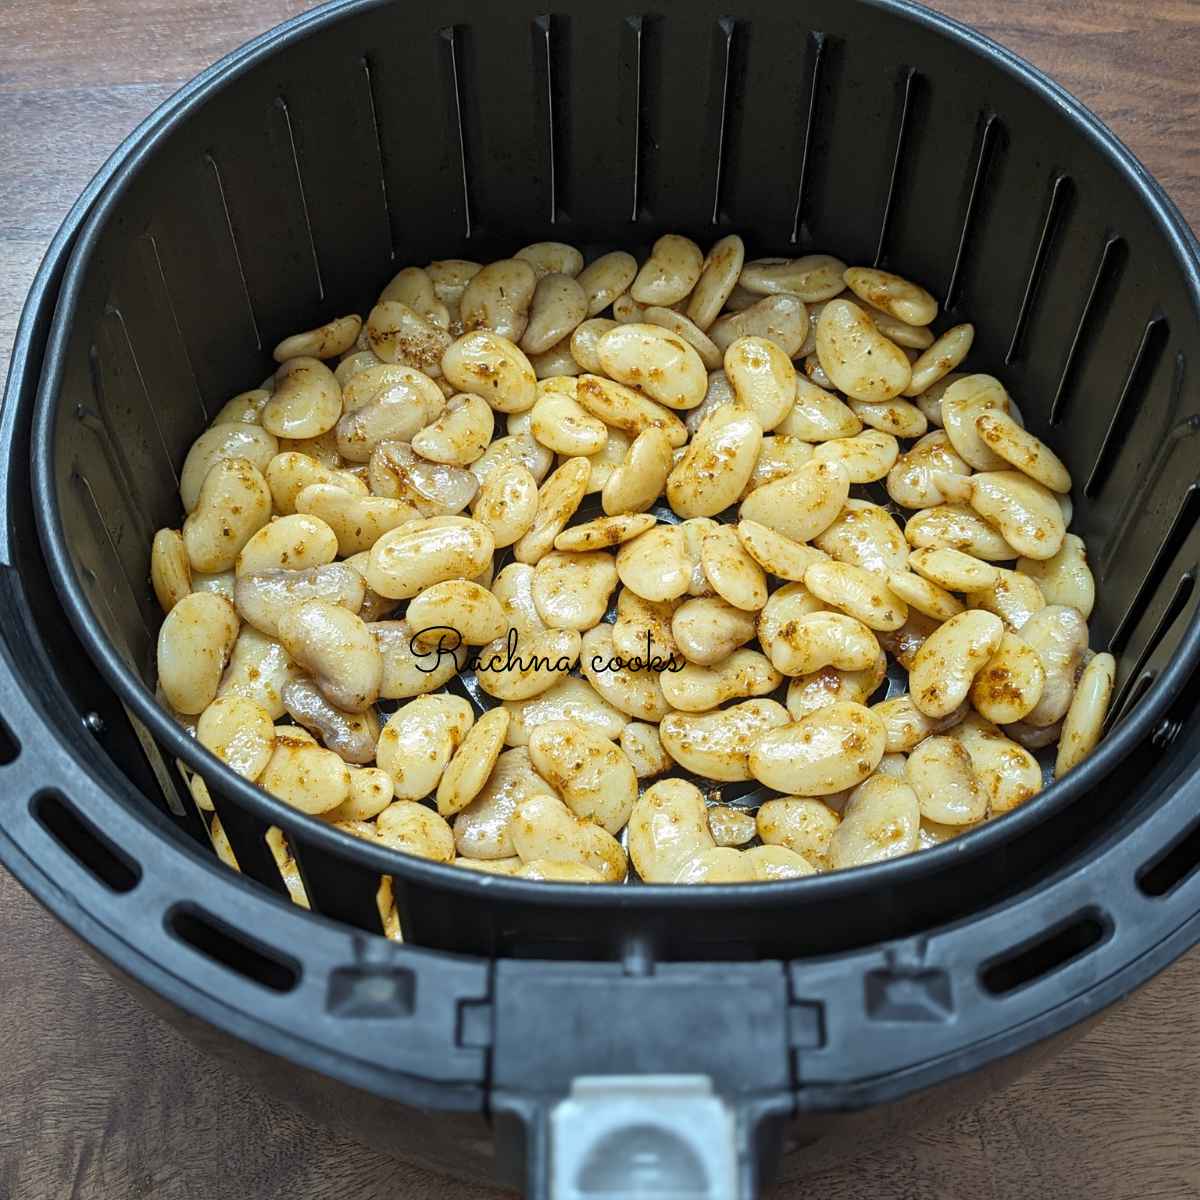 Spiced butterbeans in air fryer basket